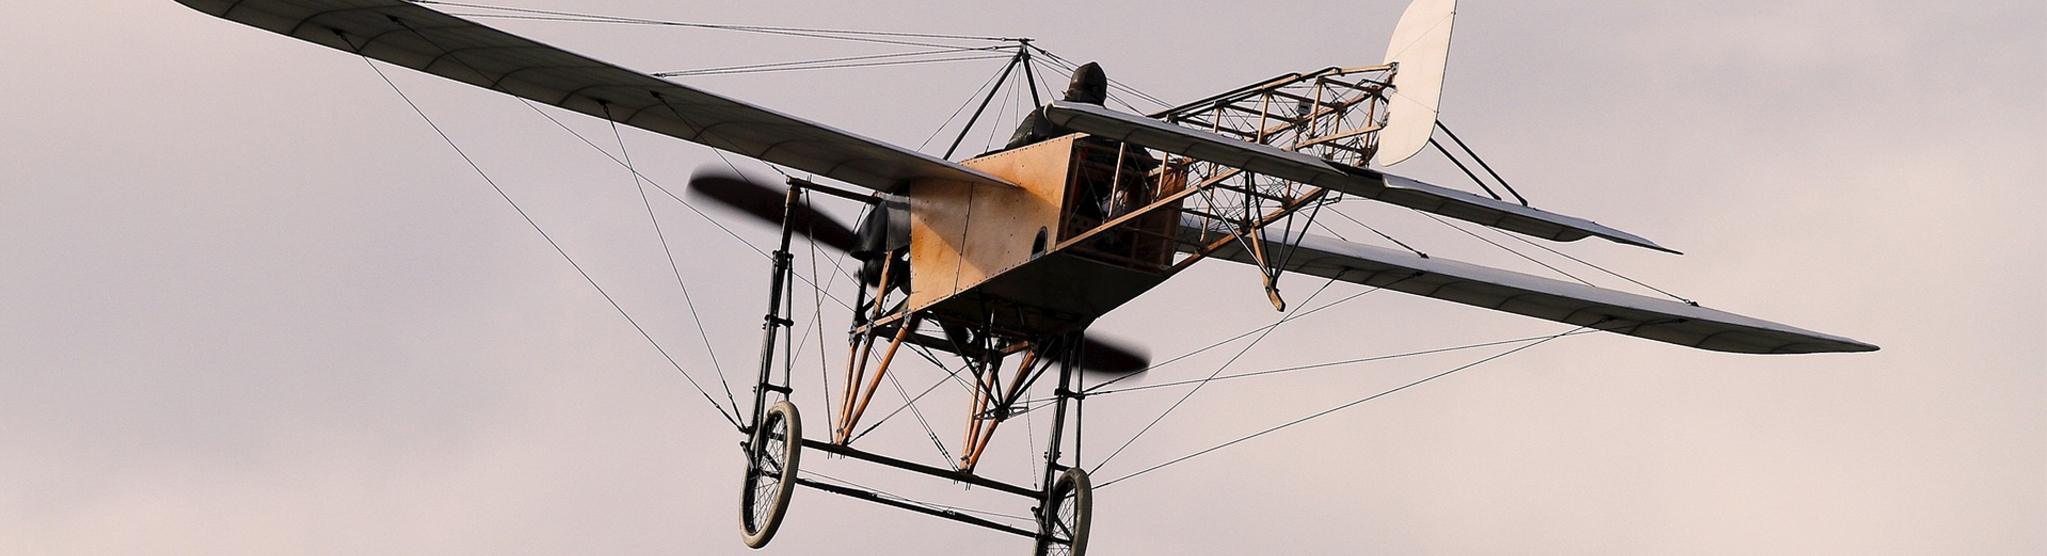 Aviation history : the beginning